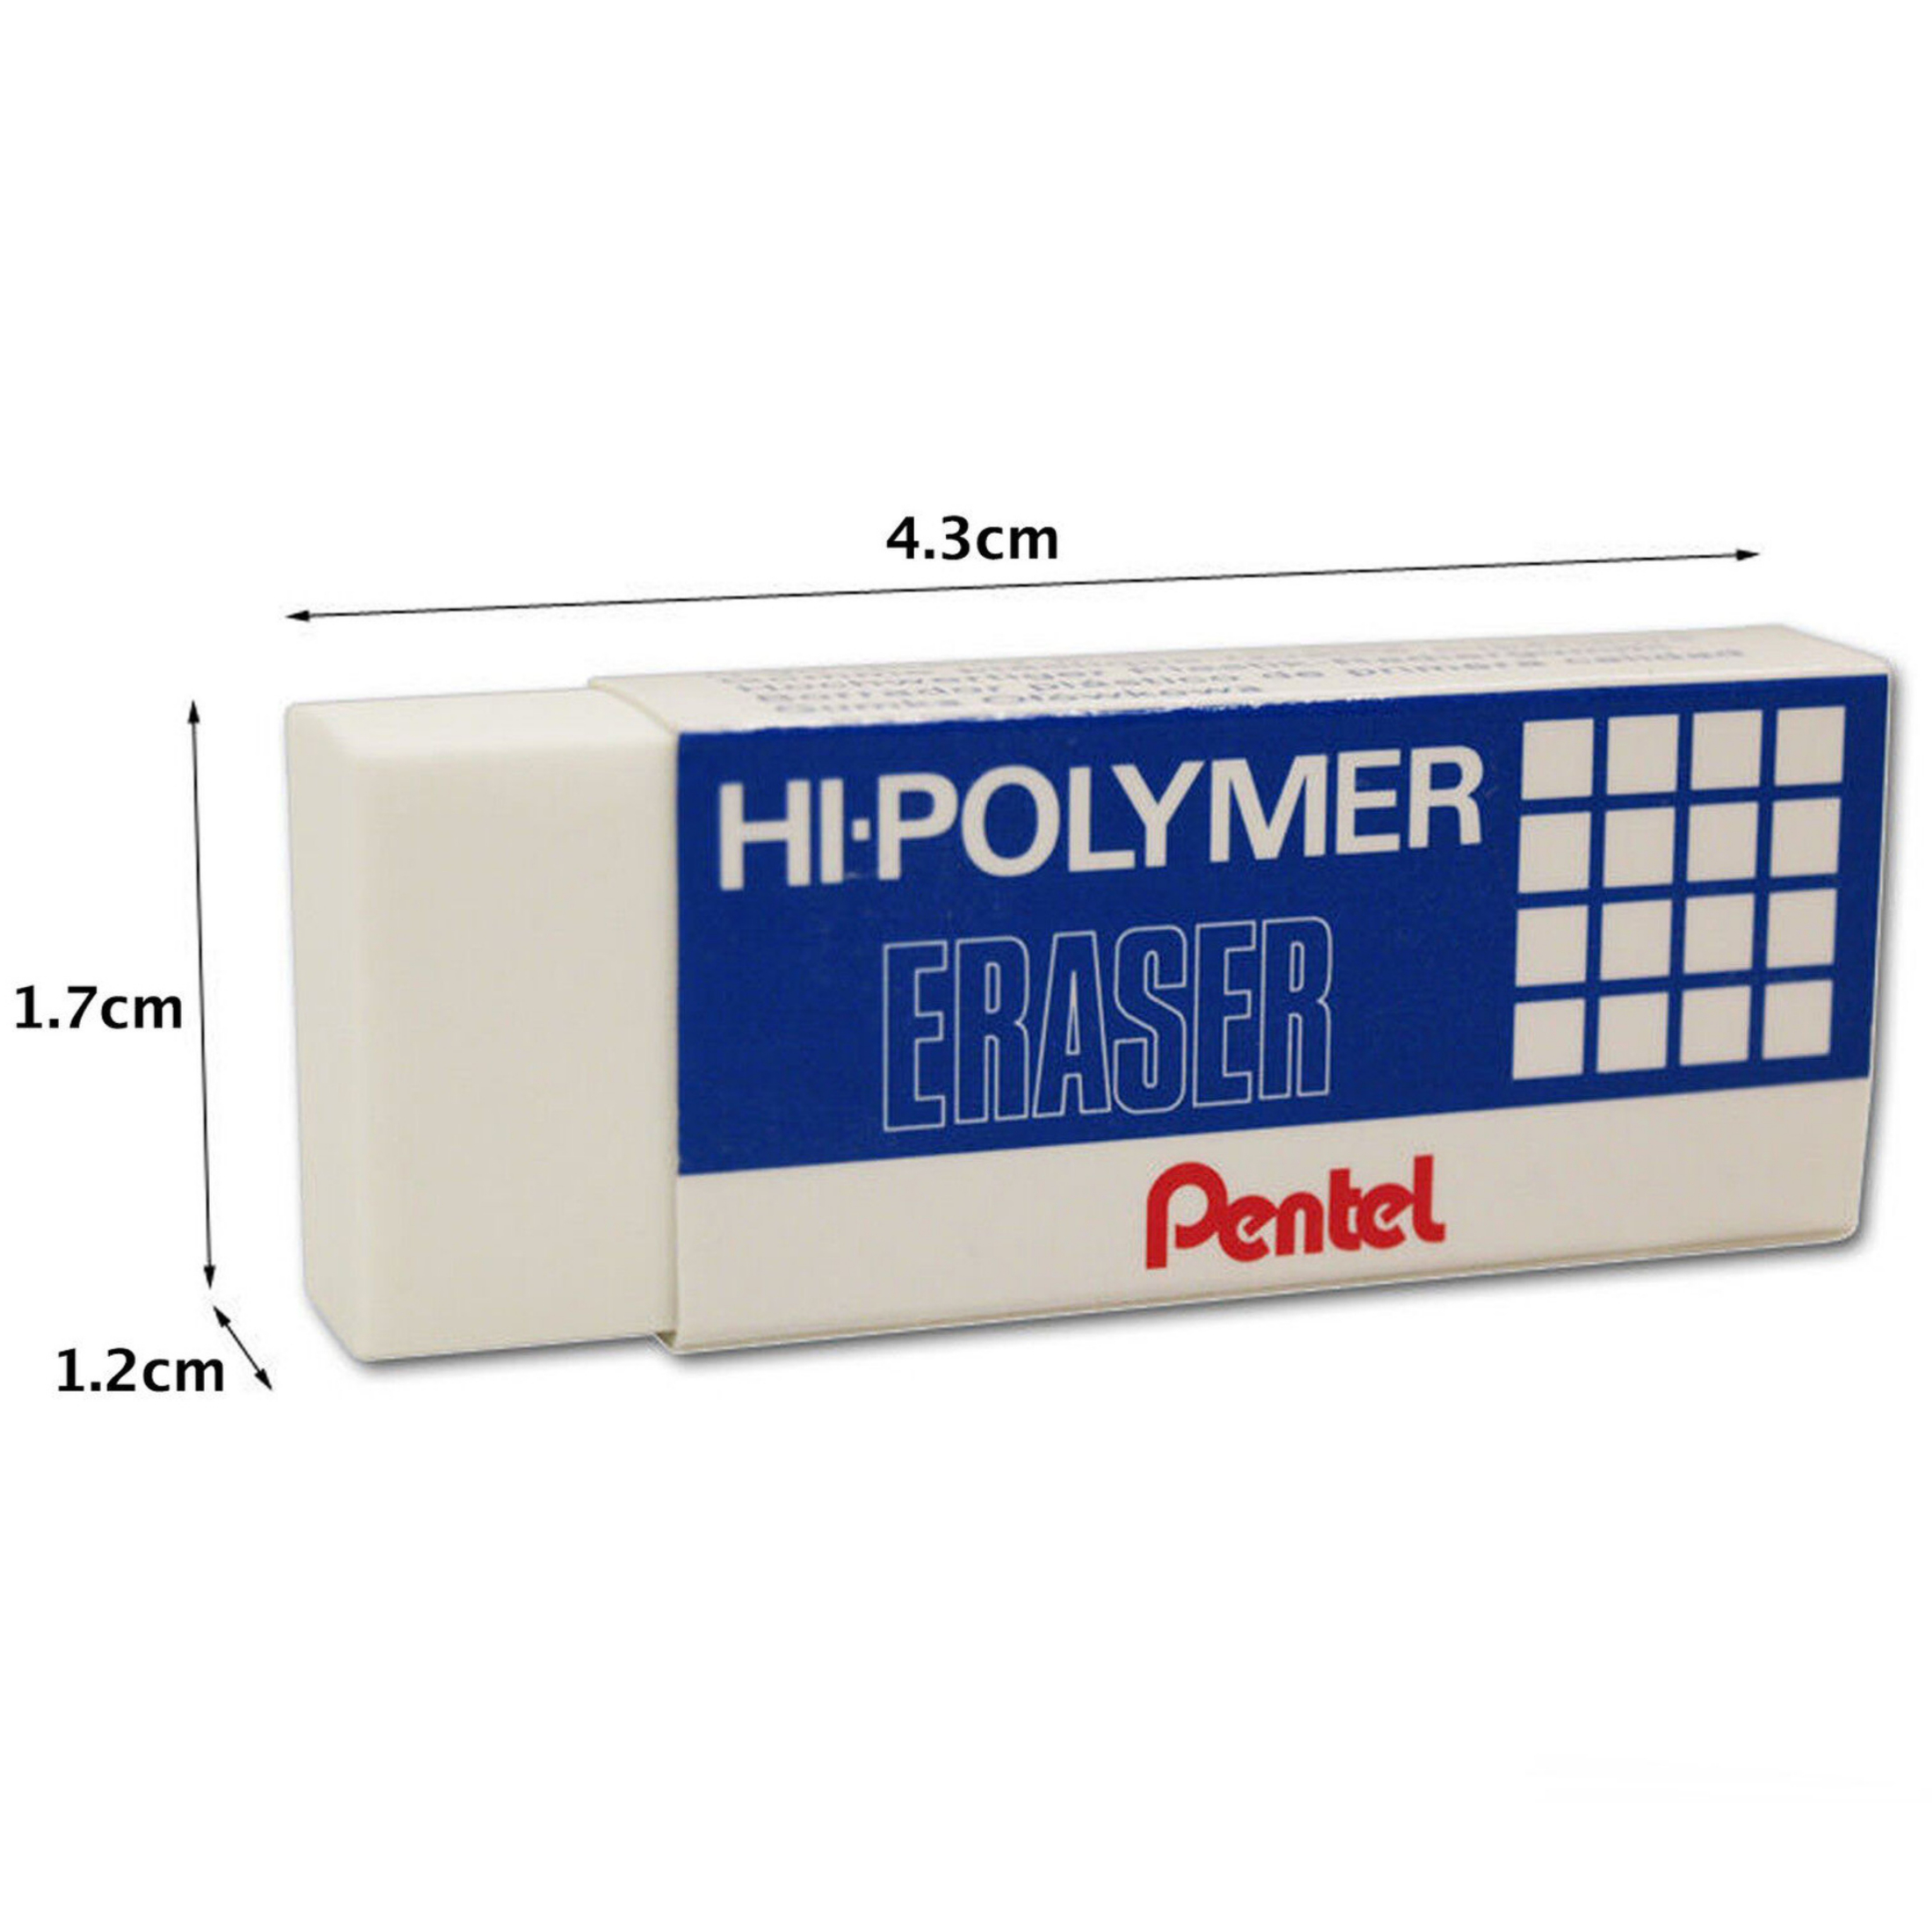 Borracha Branca Hi-Polymer ZEH05 pentel